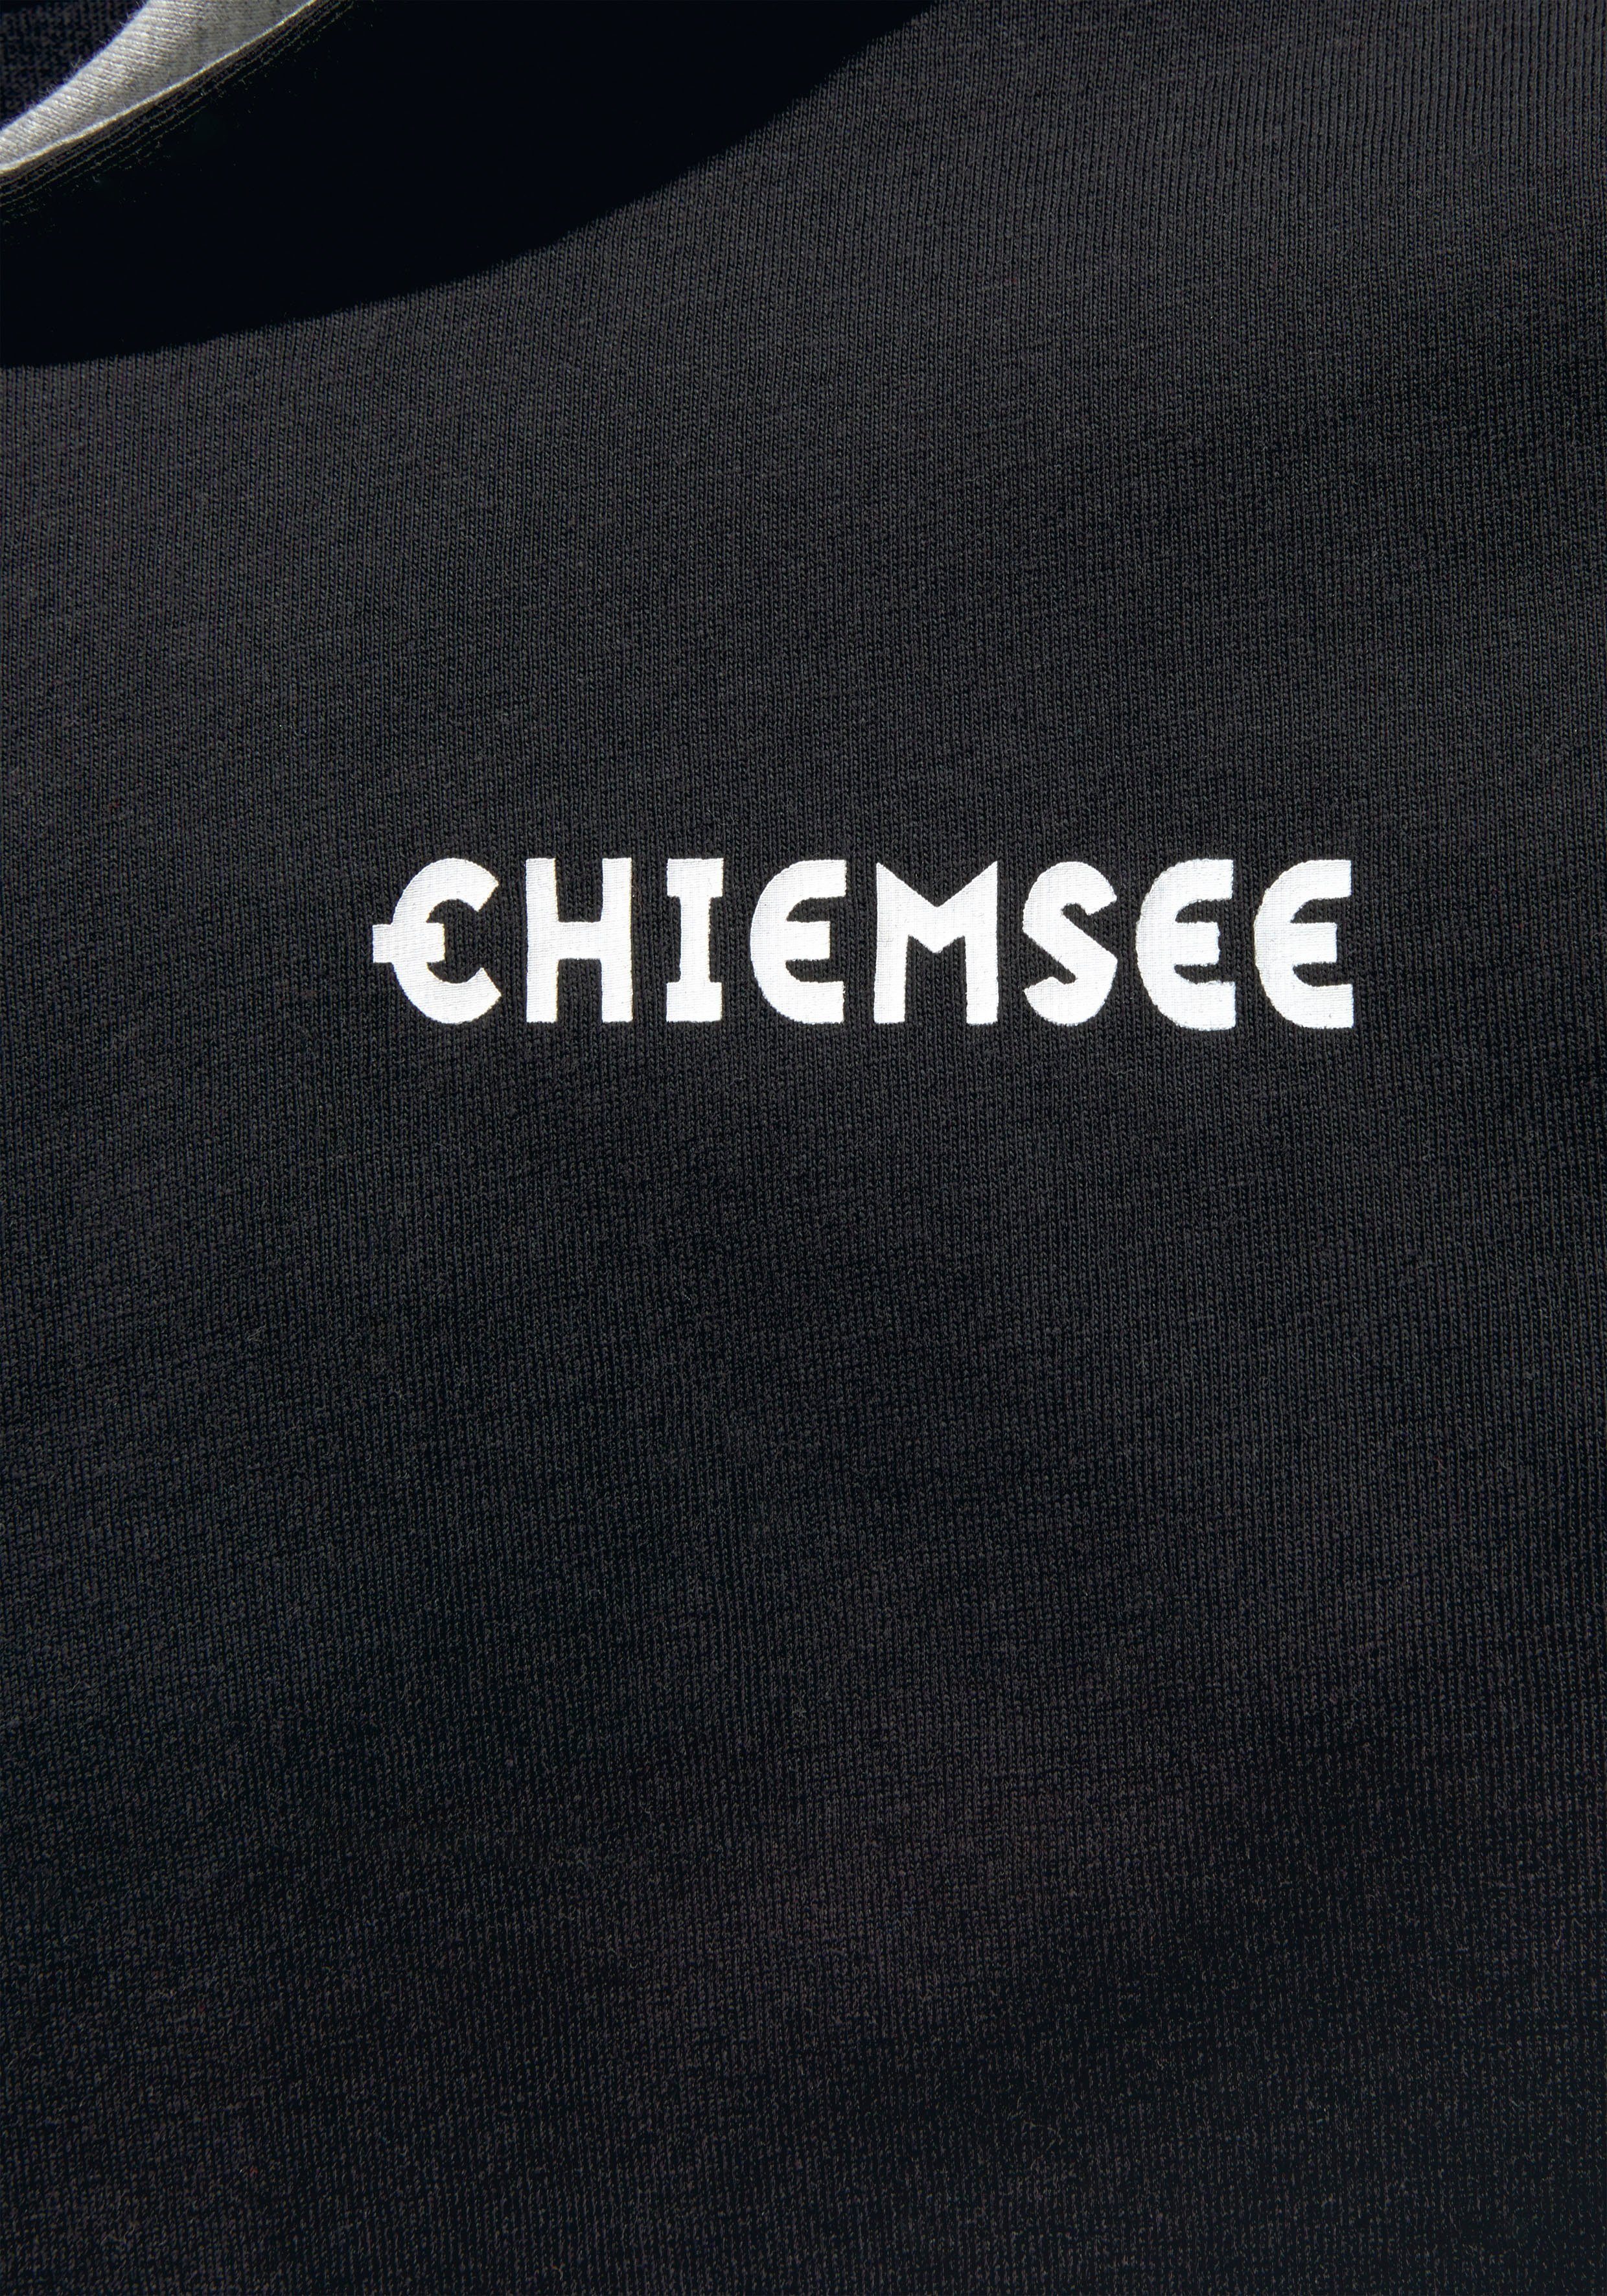 Chiemsee Kapuzenshirt mit und Rückenprint Kapuzendruck